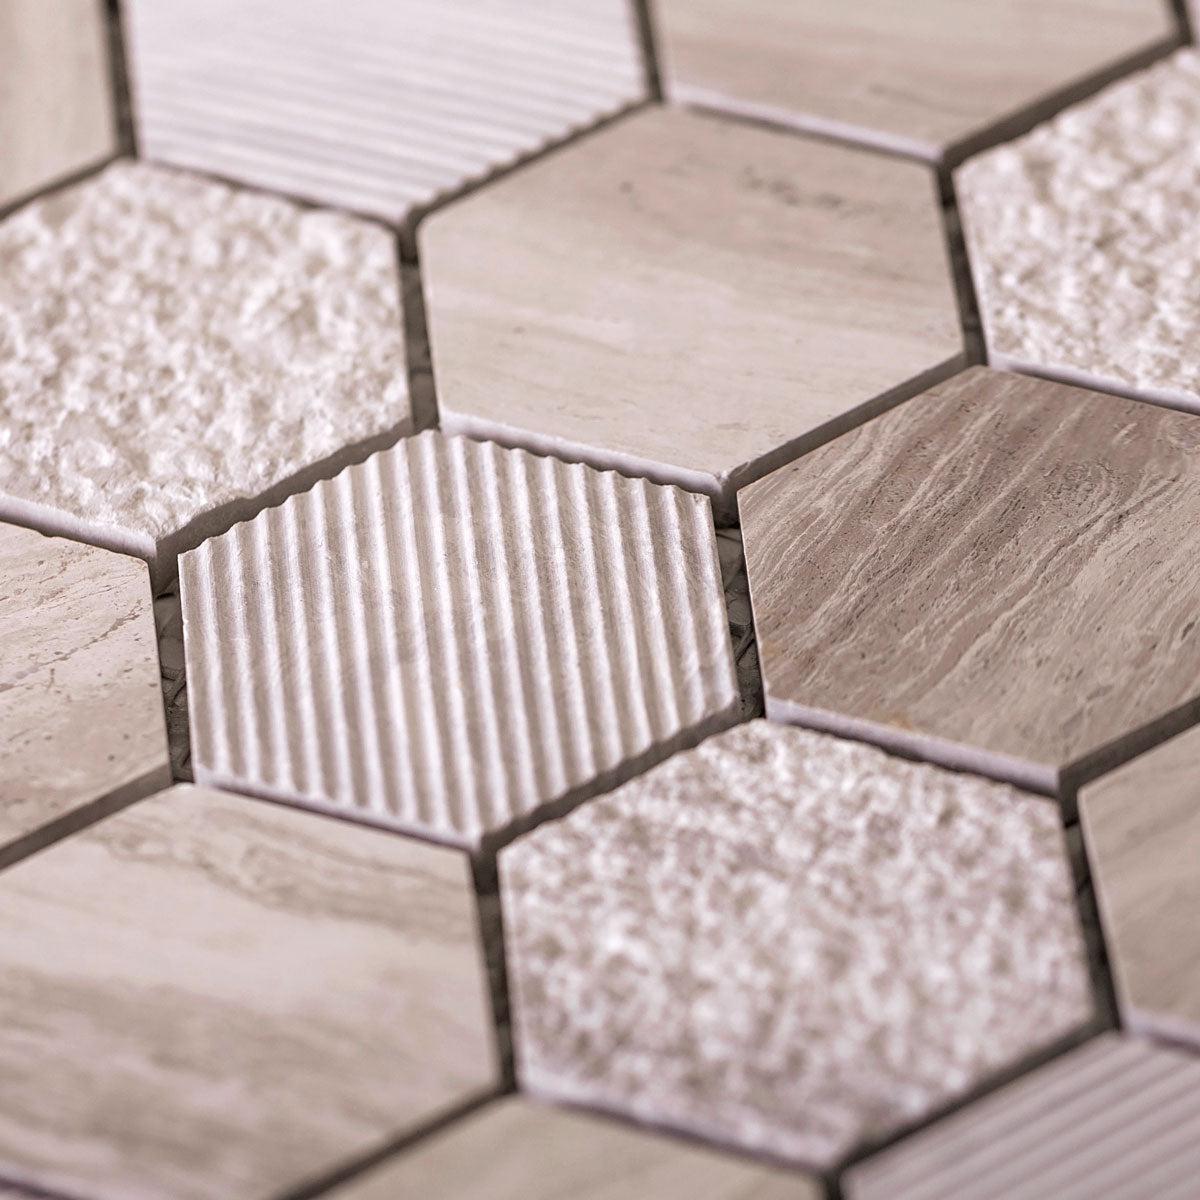 Textured Wooden Beige Honeycomb Hexagon Marble Mosaic Tile